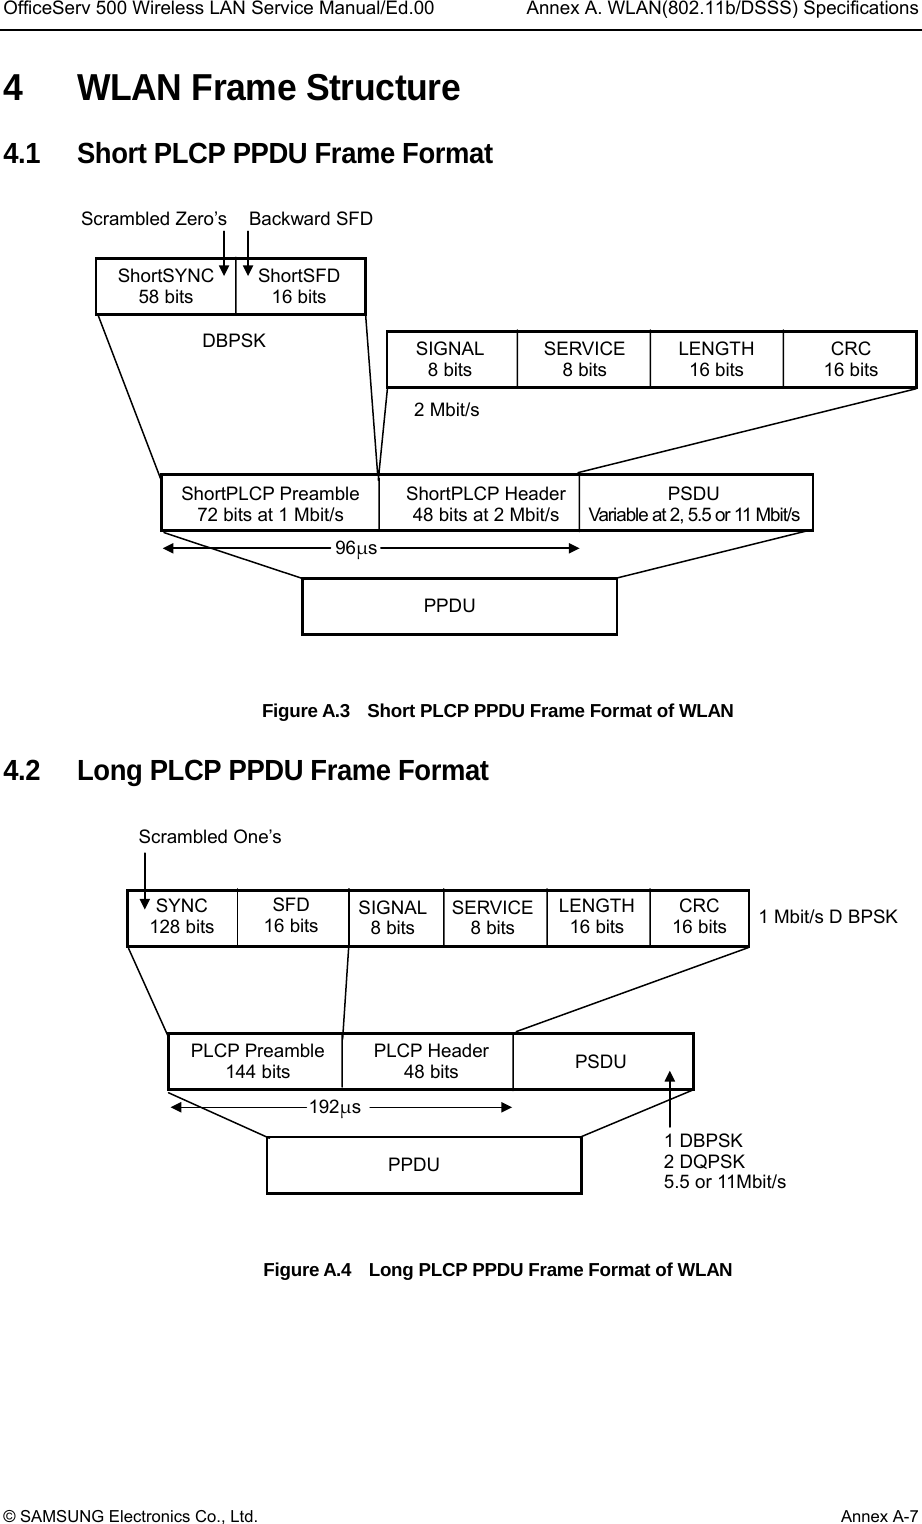 OfficeServ 500 Wireless LAN Service Manual/Ed.00  Annex A. WLAN(802.11b/DSSS) Specifications © SAMSUNG Electronics Co., Ltd.  Annex A-7 4  WLAN Frame Structure 4.1  Short PLCP PPDU Frame Format Figure A.3    Short PLCP PPDU Frame Format of WLAN  4.2  Long PLCP PPDU Frame Format Figure A.4    Long PLCP PPDU Frame Format of WLAN  SYNC128 bits SFD 16 bits SIGNAL8 bits SERVICE8 bits LENGTH16 bitsCRC 16 bits PLCP Preamble 144 bits PLCP Header48 bits  PSDUPPDU1 Mbit/s D BPSK192μs1 DBPSK 2 DQPSK 5.5 or 11Mbit/s Scrambled One’s ShortSYNC 58 bits ShortSFD16 bits DBPSK  SIGNAL8 bits SERVICE8 bits LENGTH 16 bits CRC16 bits ShortPLCP Preamble72 bits at 1 Mbit/s ShortPLCP Header48 bits at 2 Mbit/s PSDU Variable at 2, 5.5 or 11 Mbit/s PPDU2 Mbit/s96μsScrambled Zero’s  Backward SFD